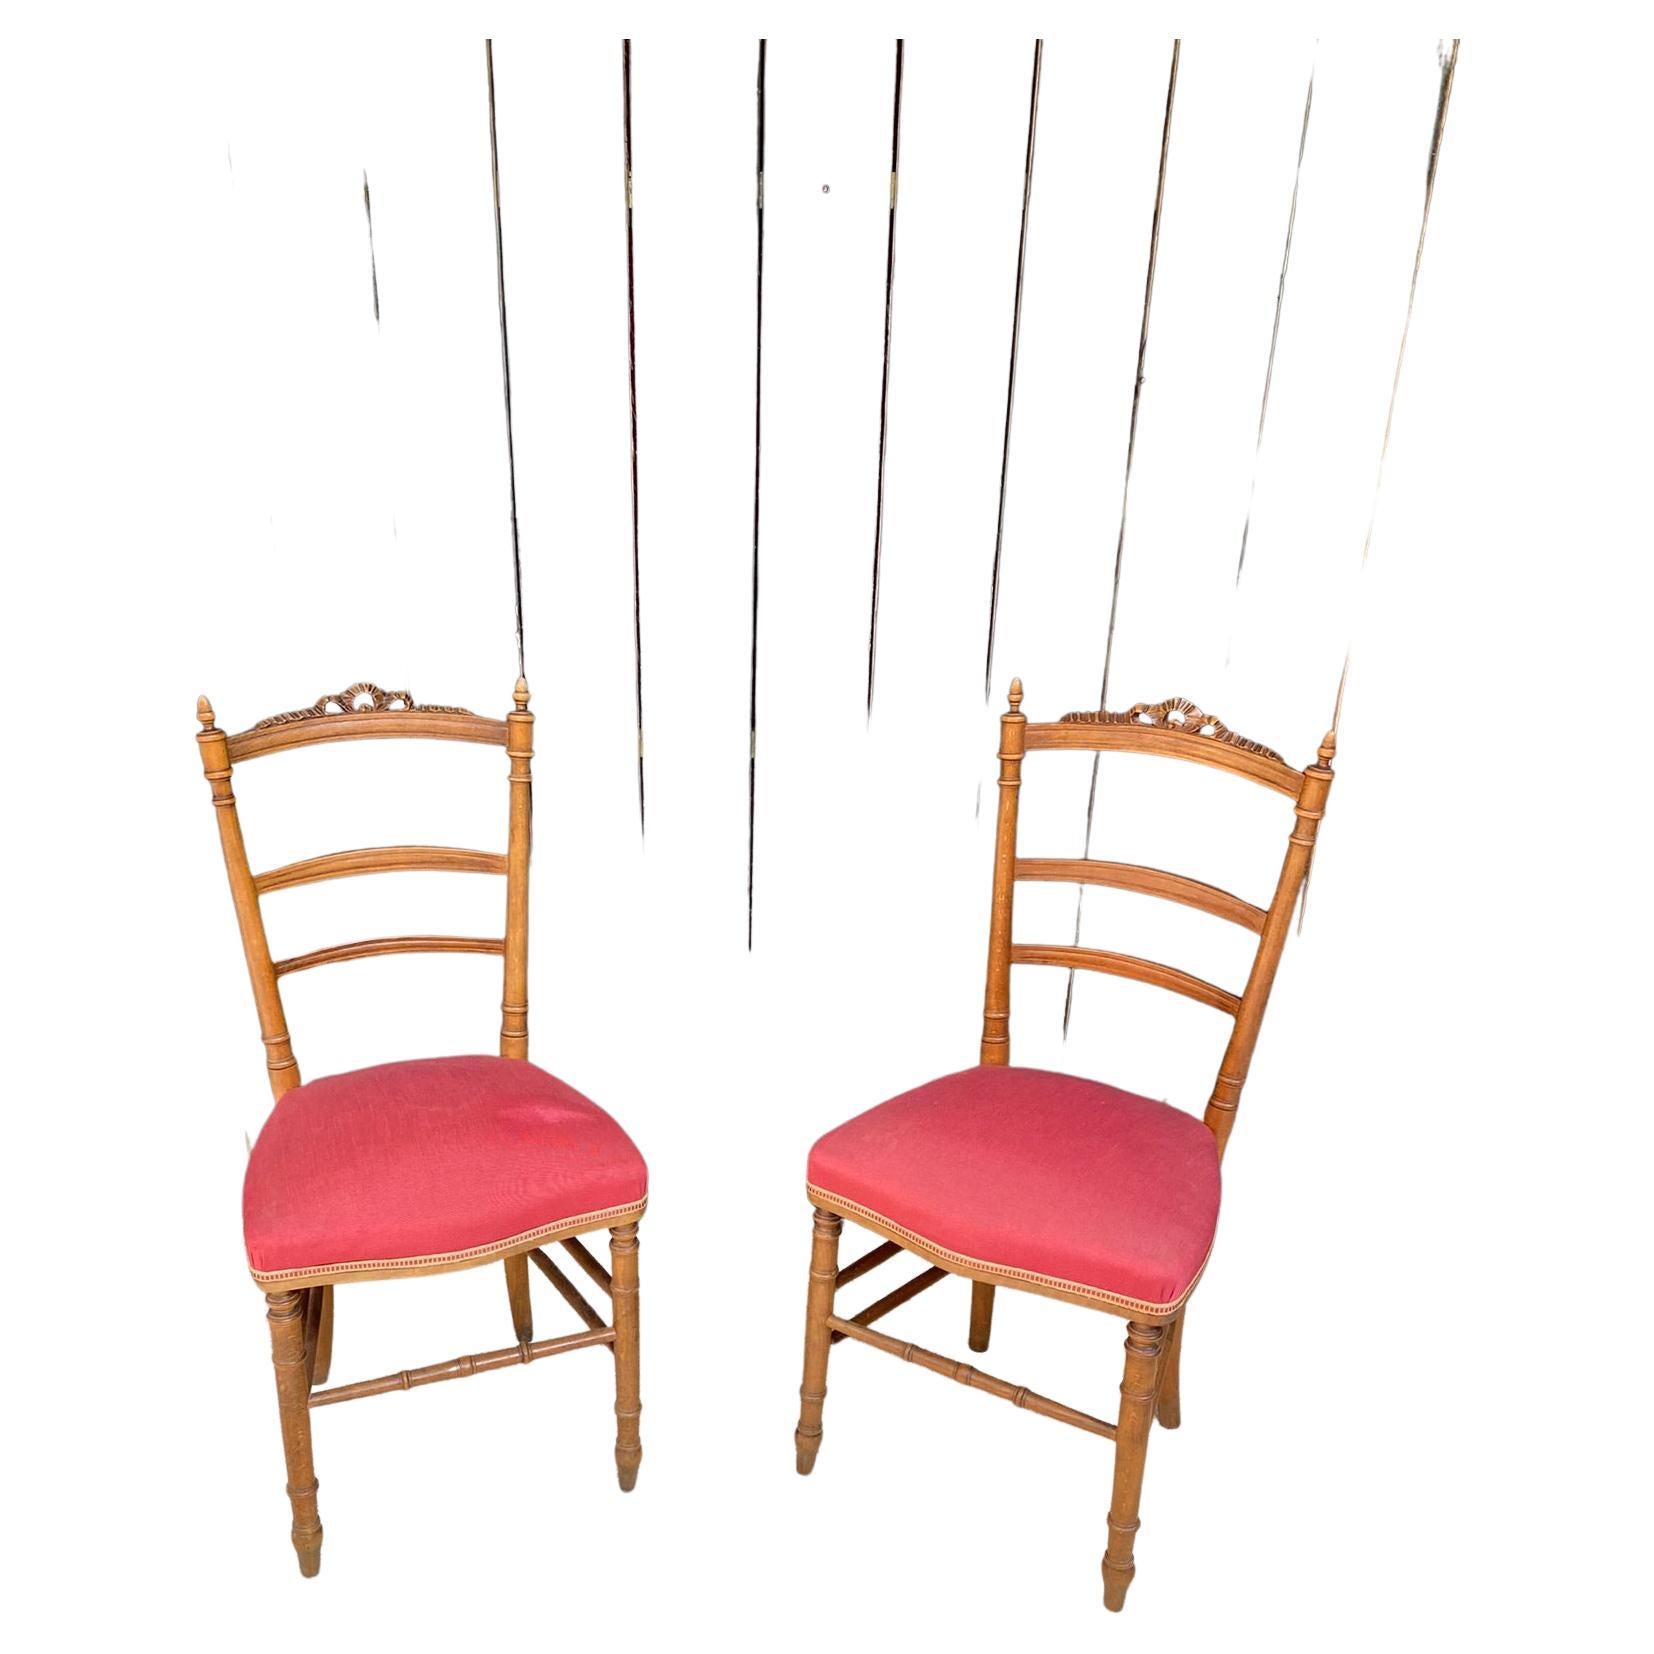 2 Original Napoleon III Chairs, France, 1850s